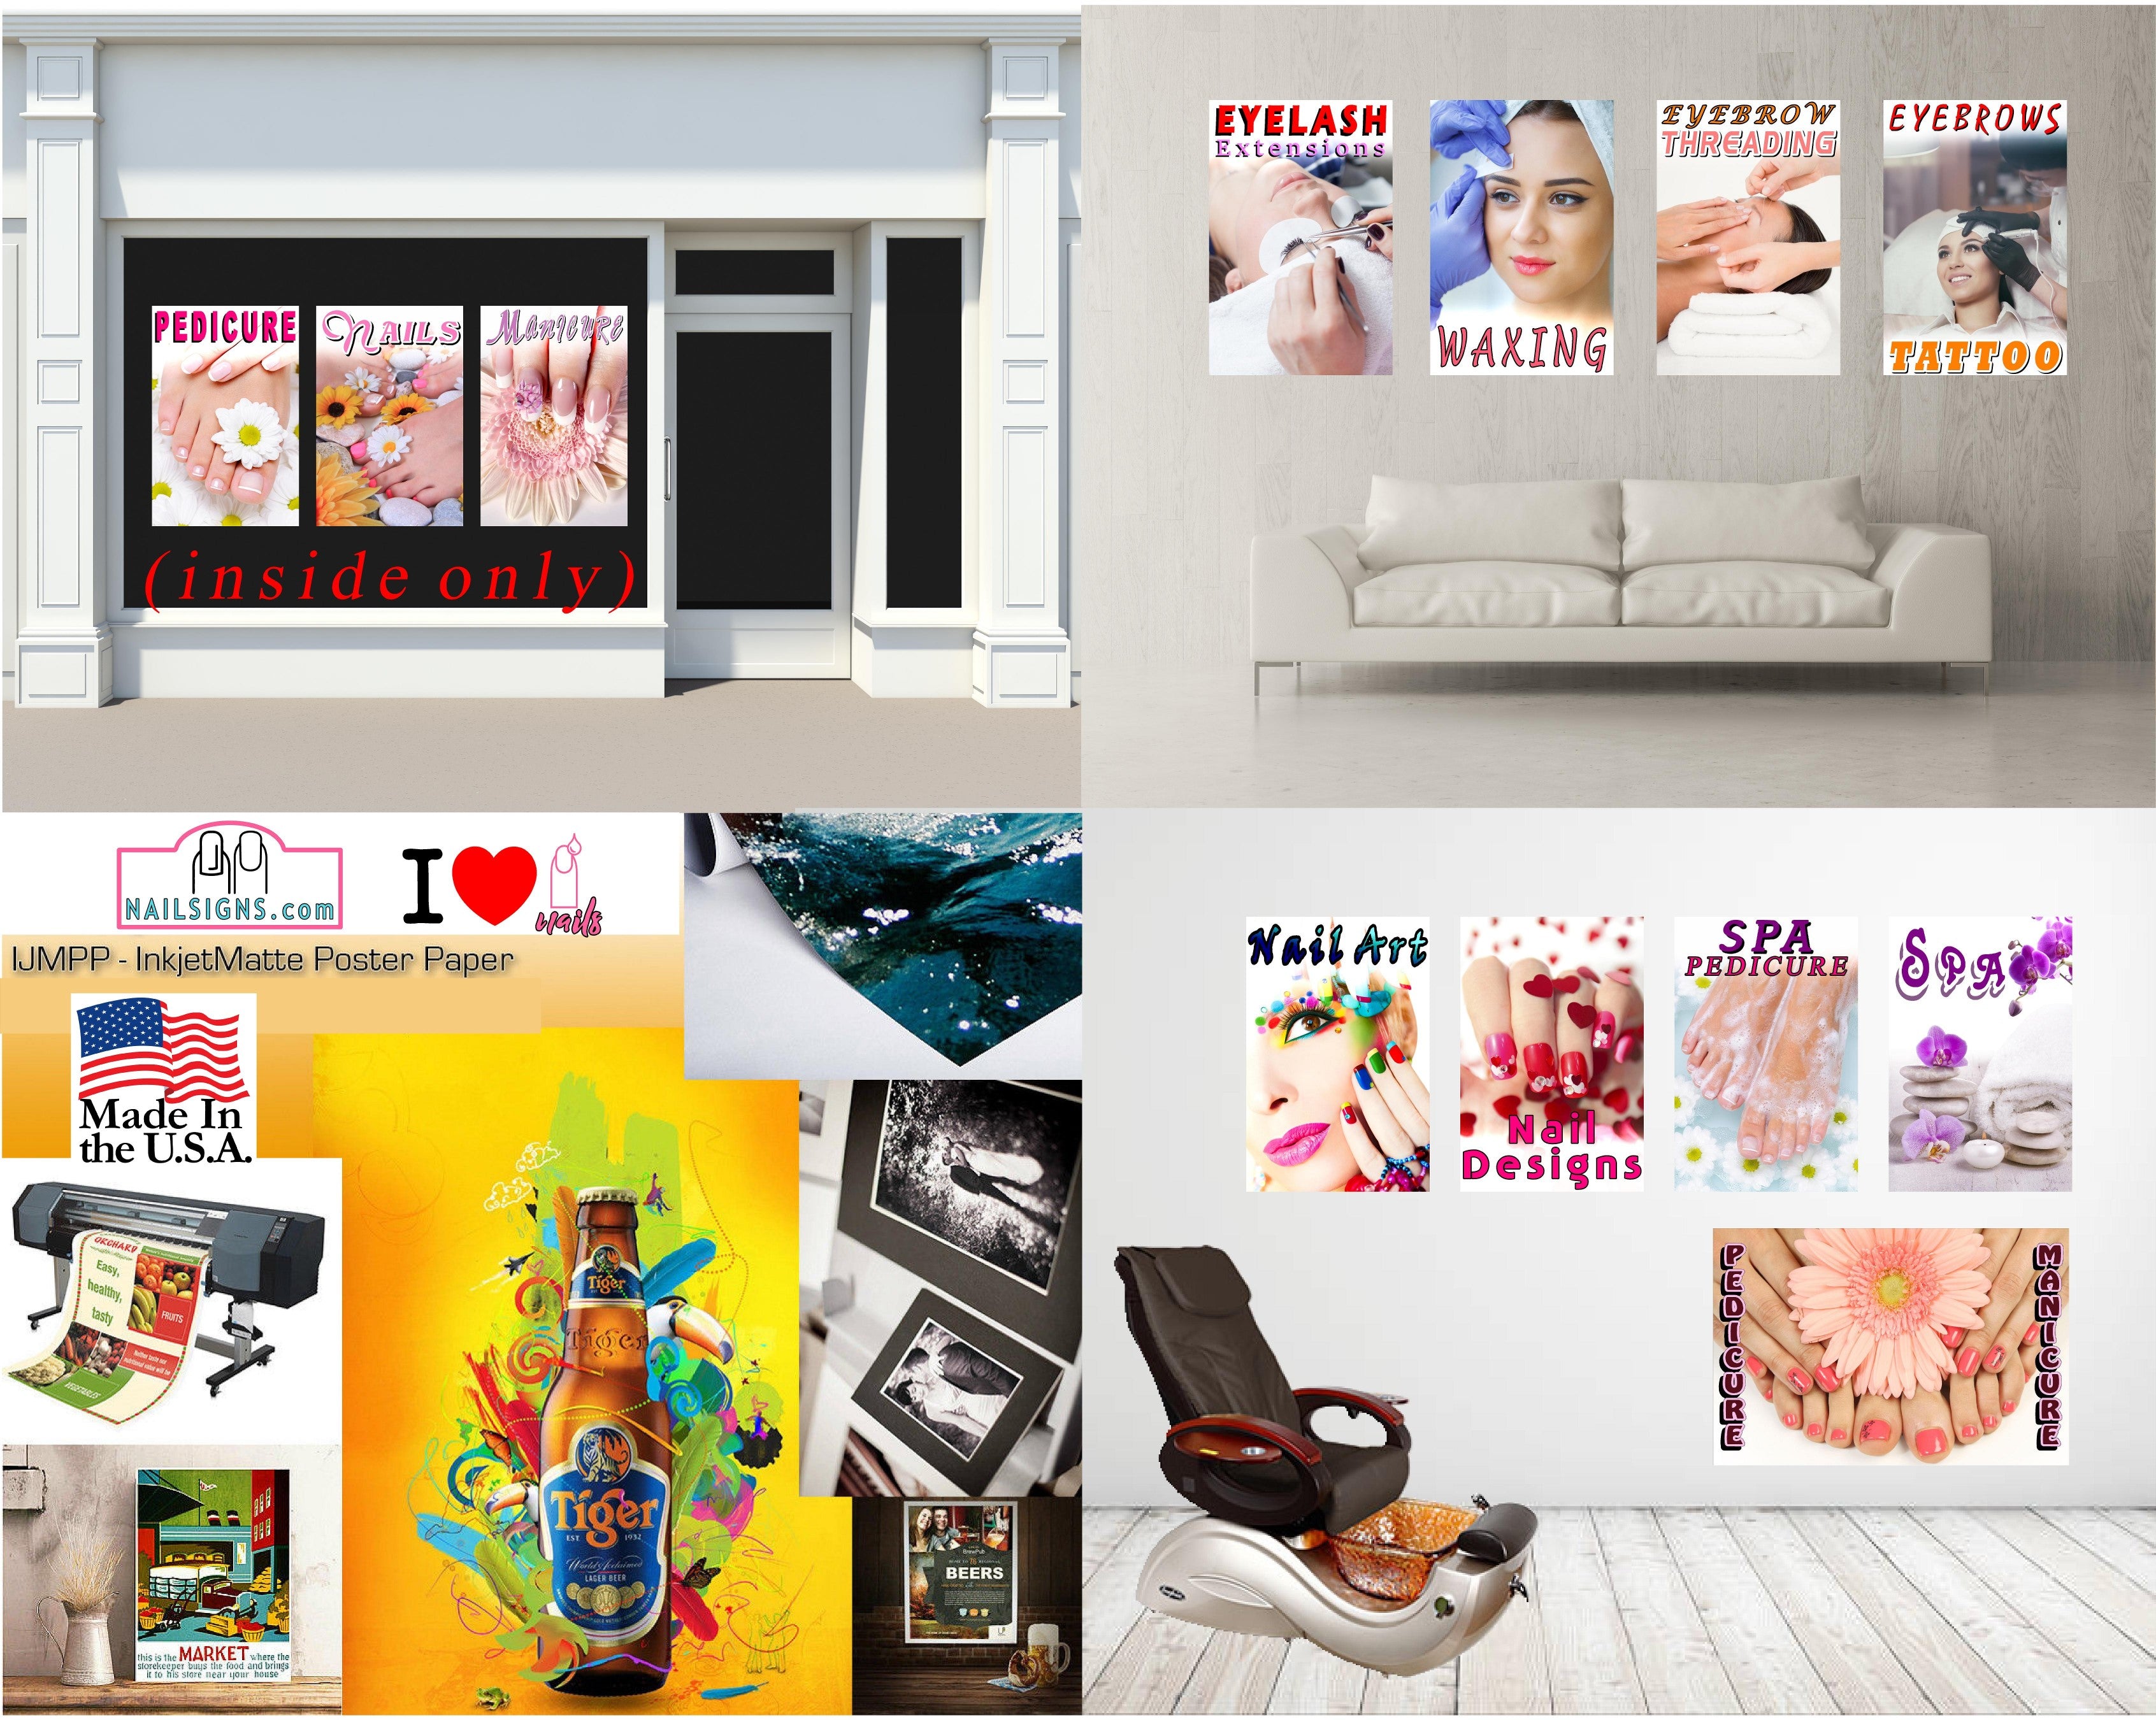 Pedicure 05 Photo-Realistic Paper Poster Premium Matte Interior Inside Sign Advertising Marketing Wall Window Non-Laminated Horizontal